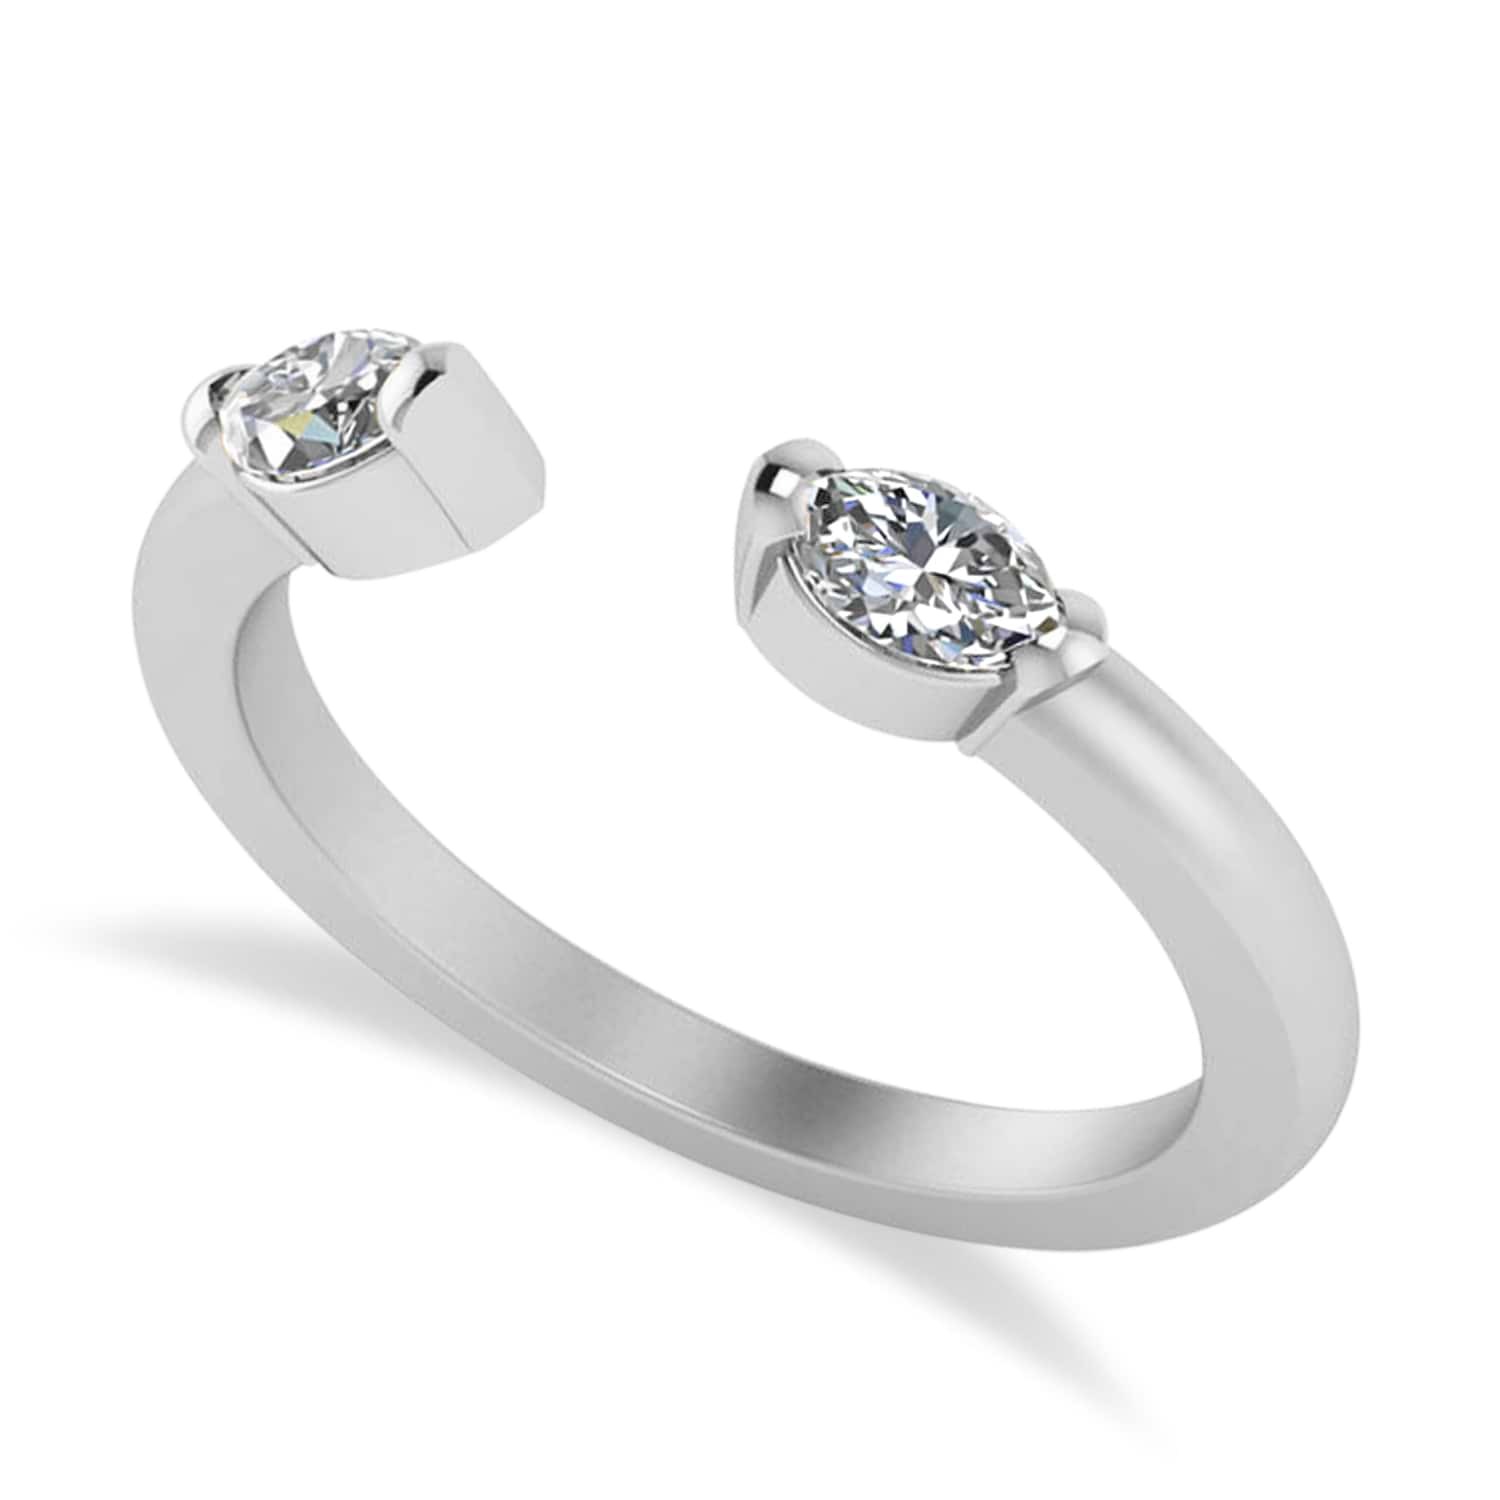 Diamond Open Concept Ring/Band 14k White Gold (0.40ct)